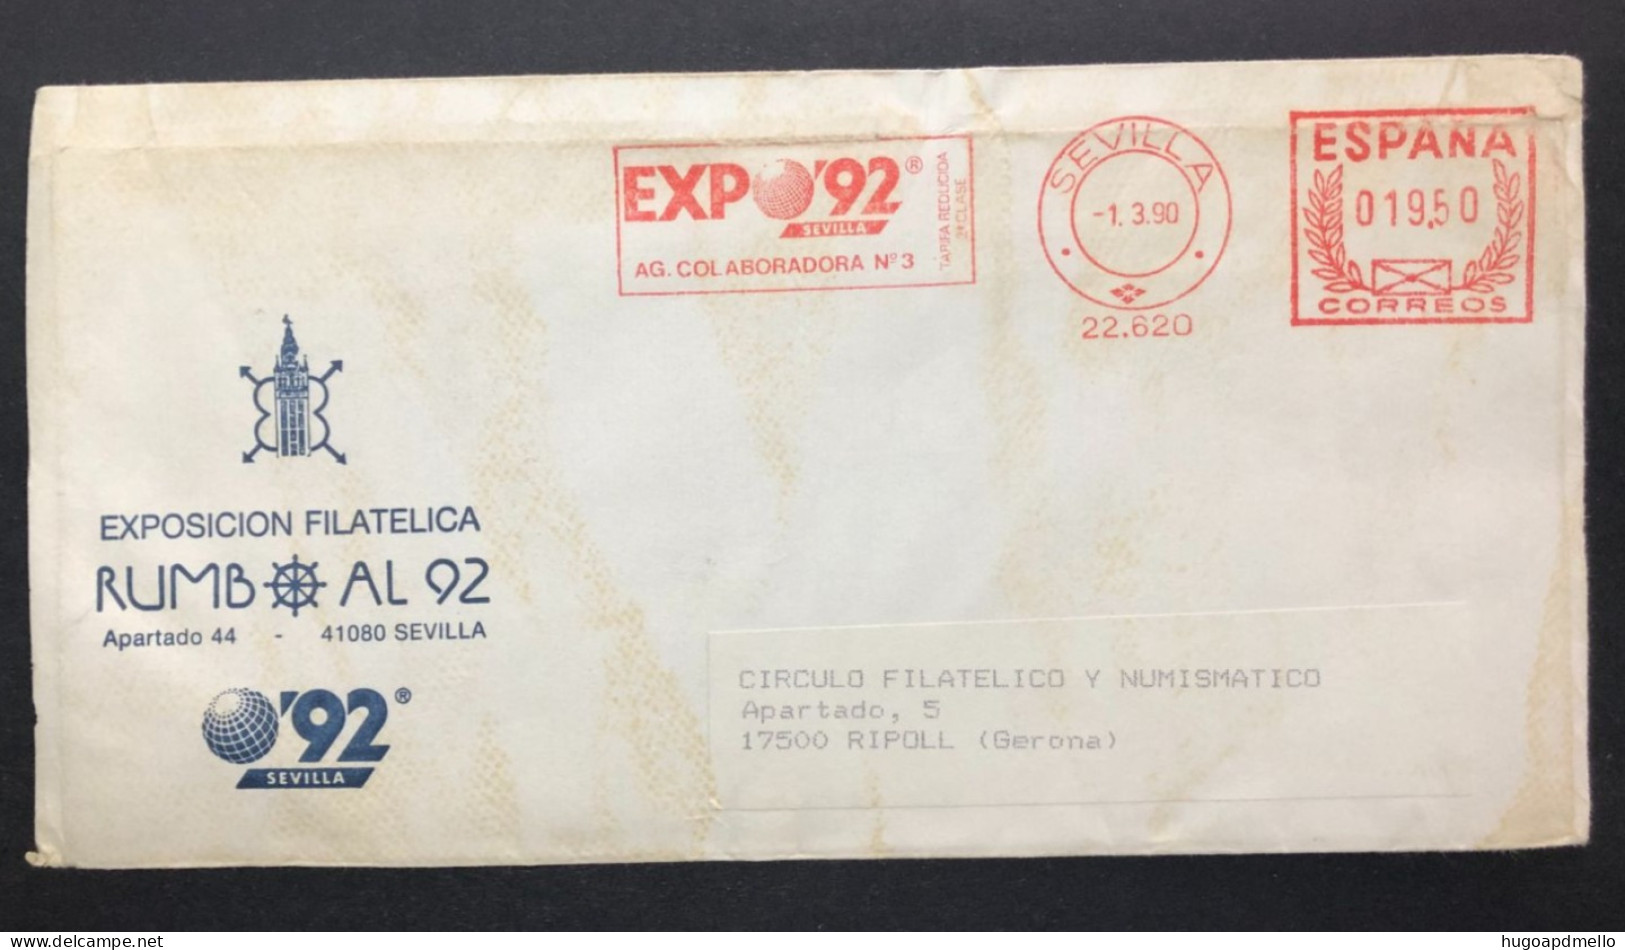 SPAIN, Cover With Special Cancellation « EXPO '92 », « SEVILLA Postmark », 1990 - 1992 – Siviglia (Spagna)